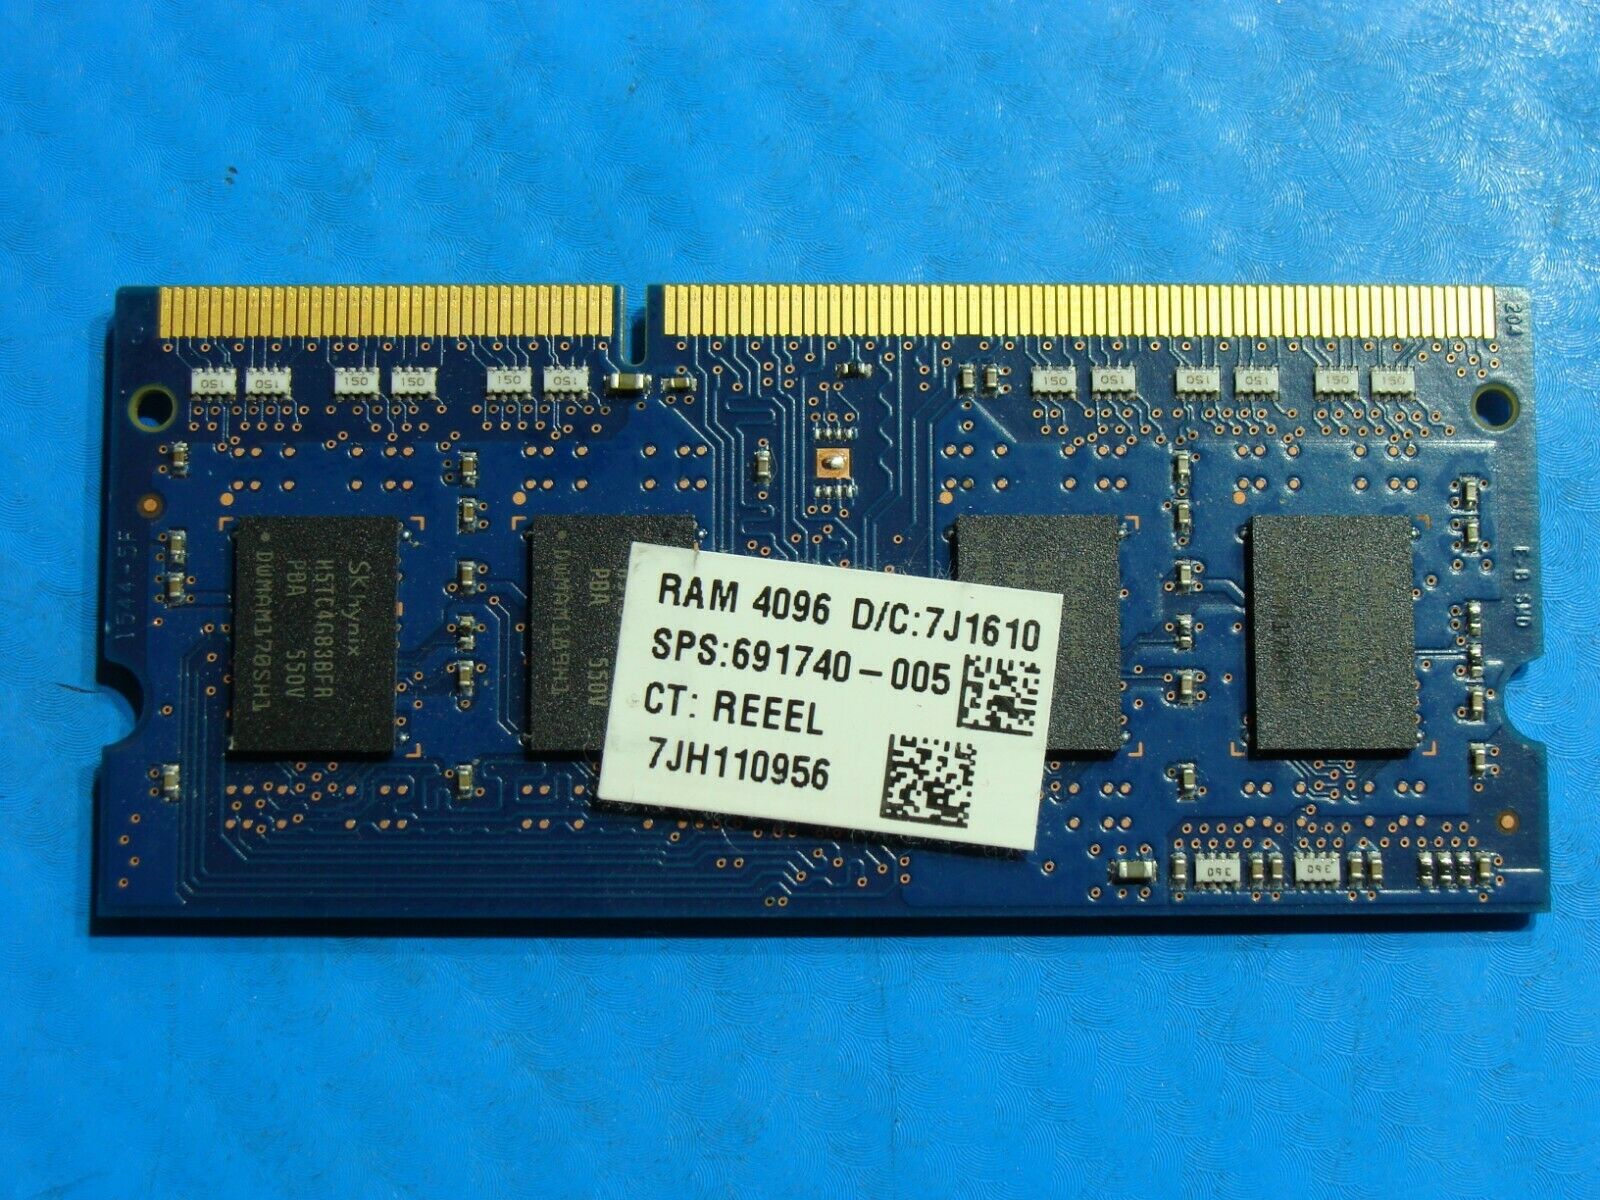 Asus X75A SO-DIMM SK Hynix 4GB Memory PC3L-12800S-11-13-B4 HMT451S6BFR8A-PB 